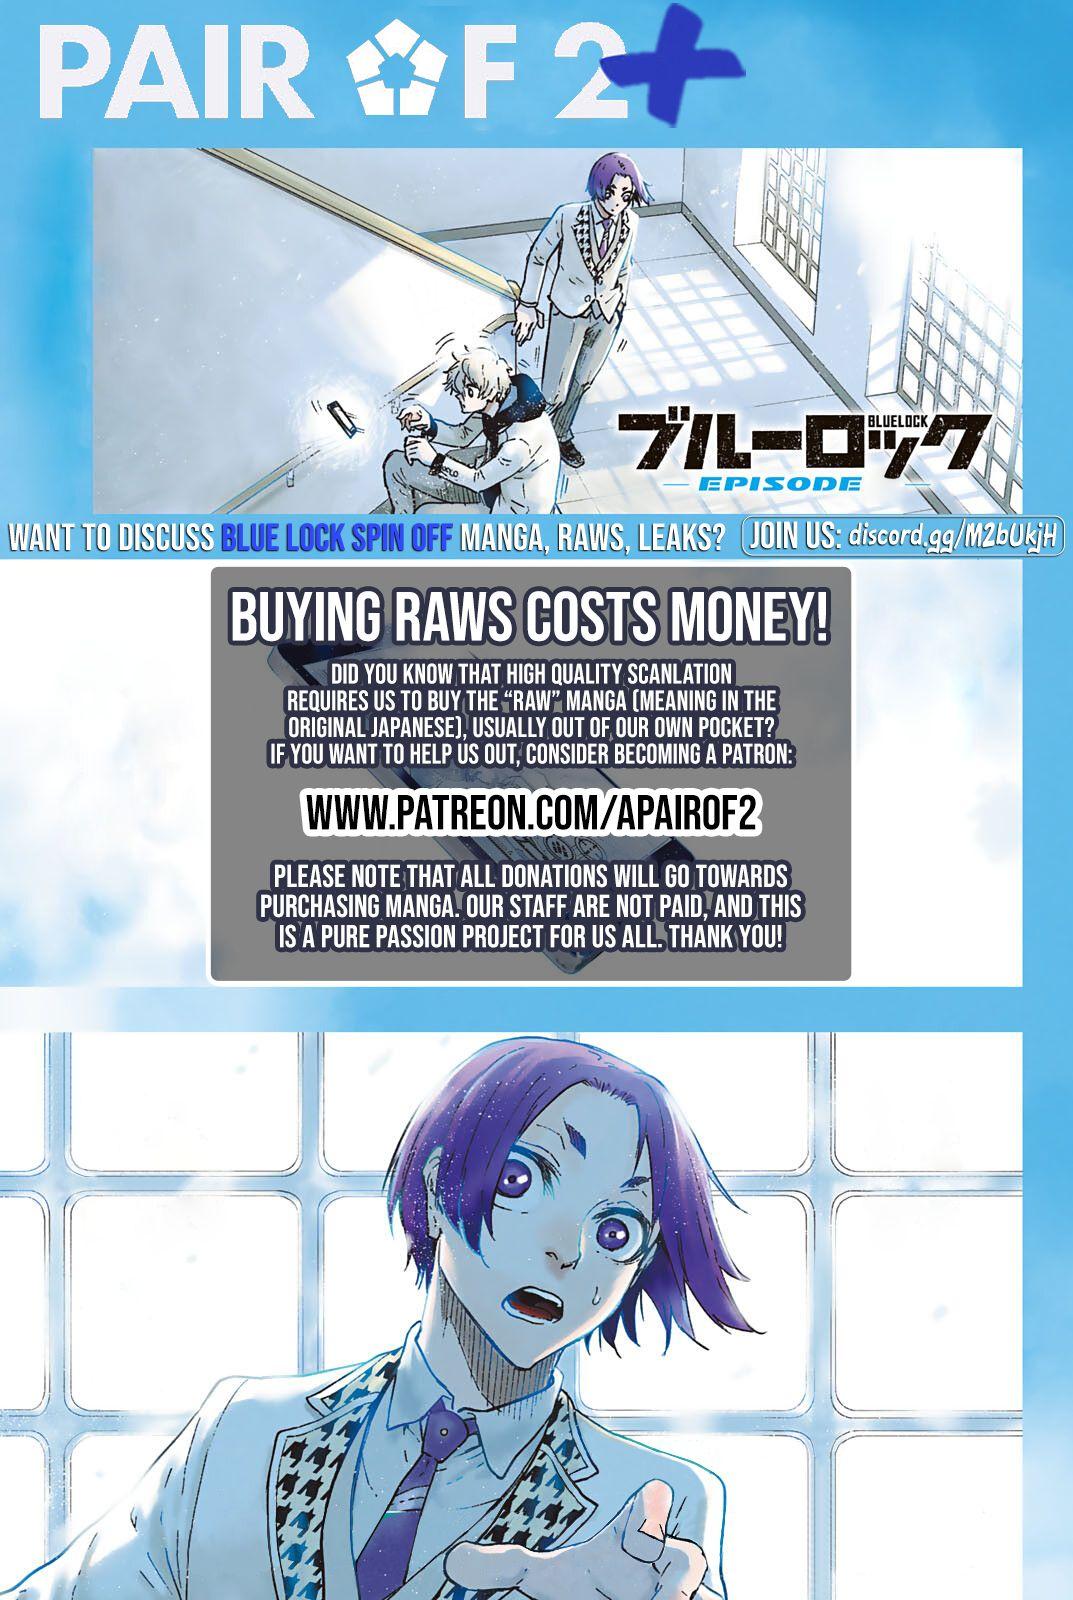 Blue Lock - Episode Nagi Vol.1 Ch.12 Page 24 - Mangago